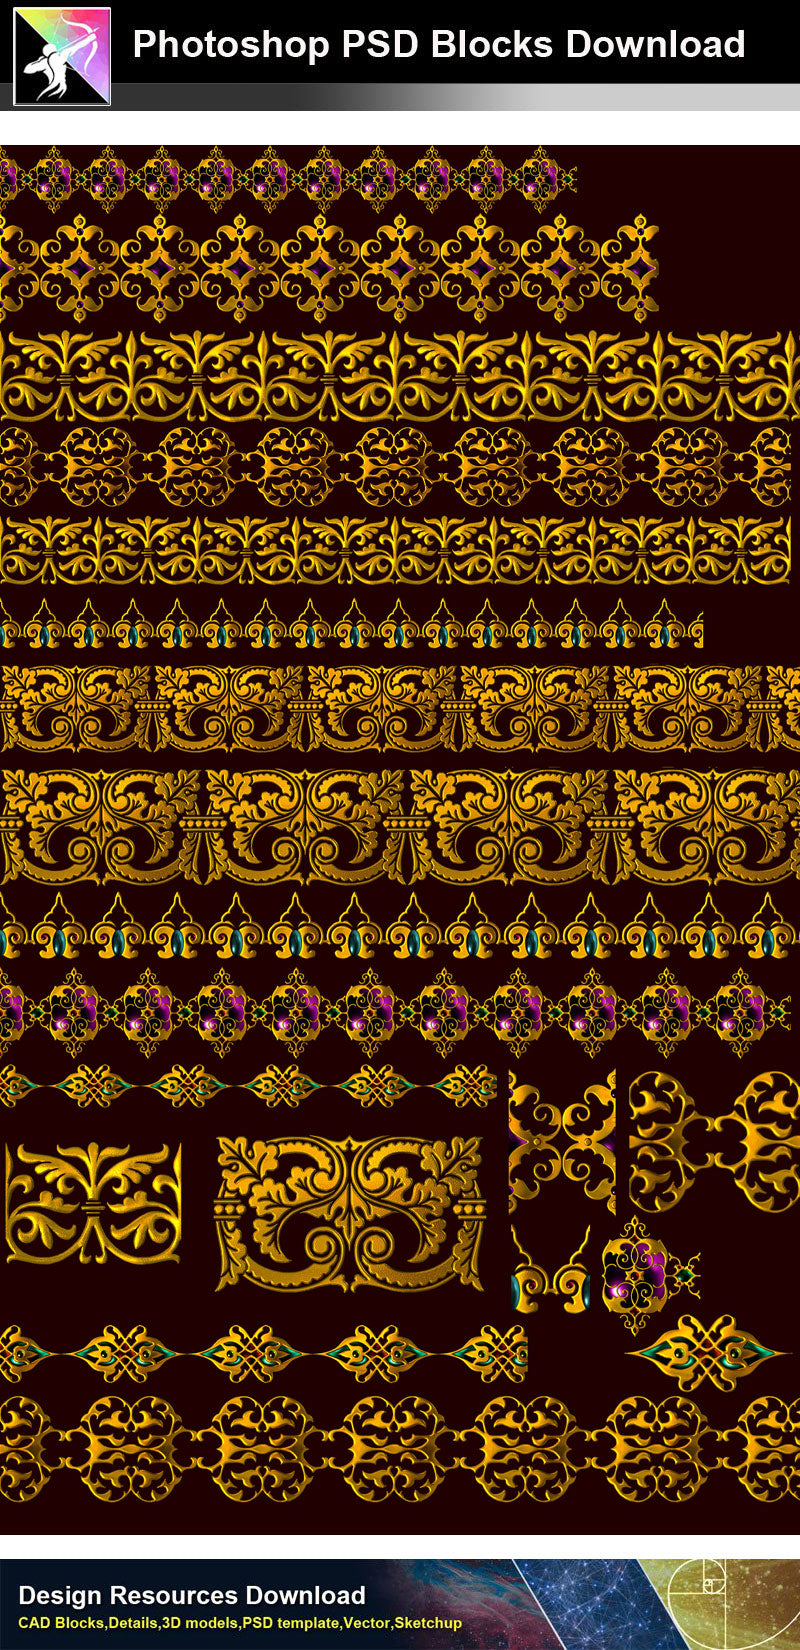 【Photoshop PSD Blocks】Gold Decorative Borders 5